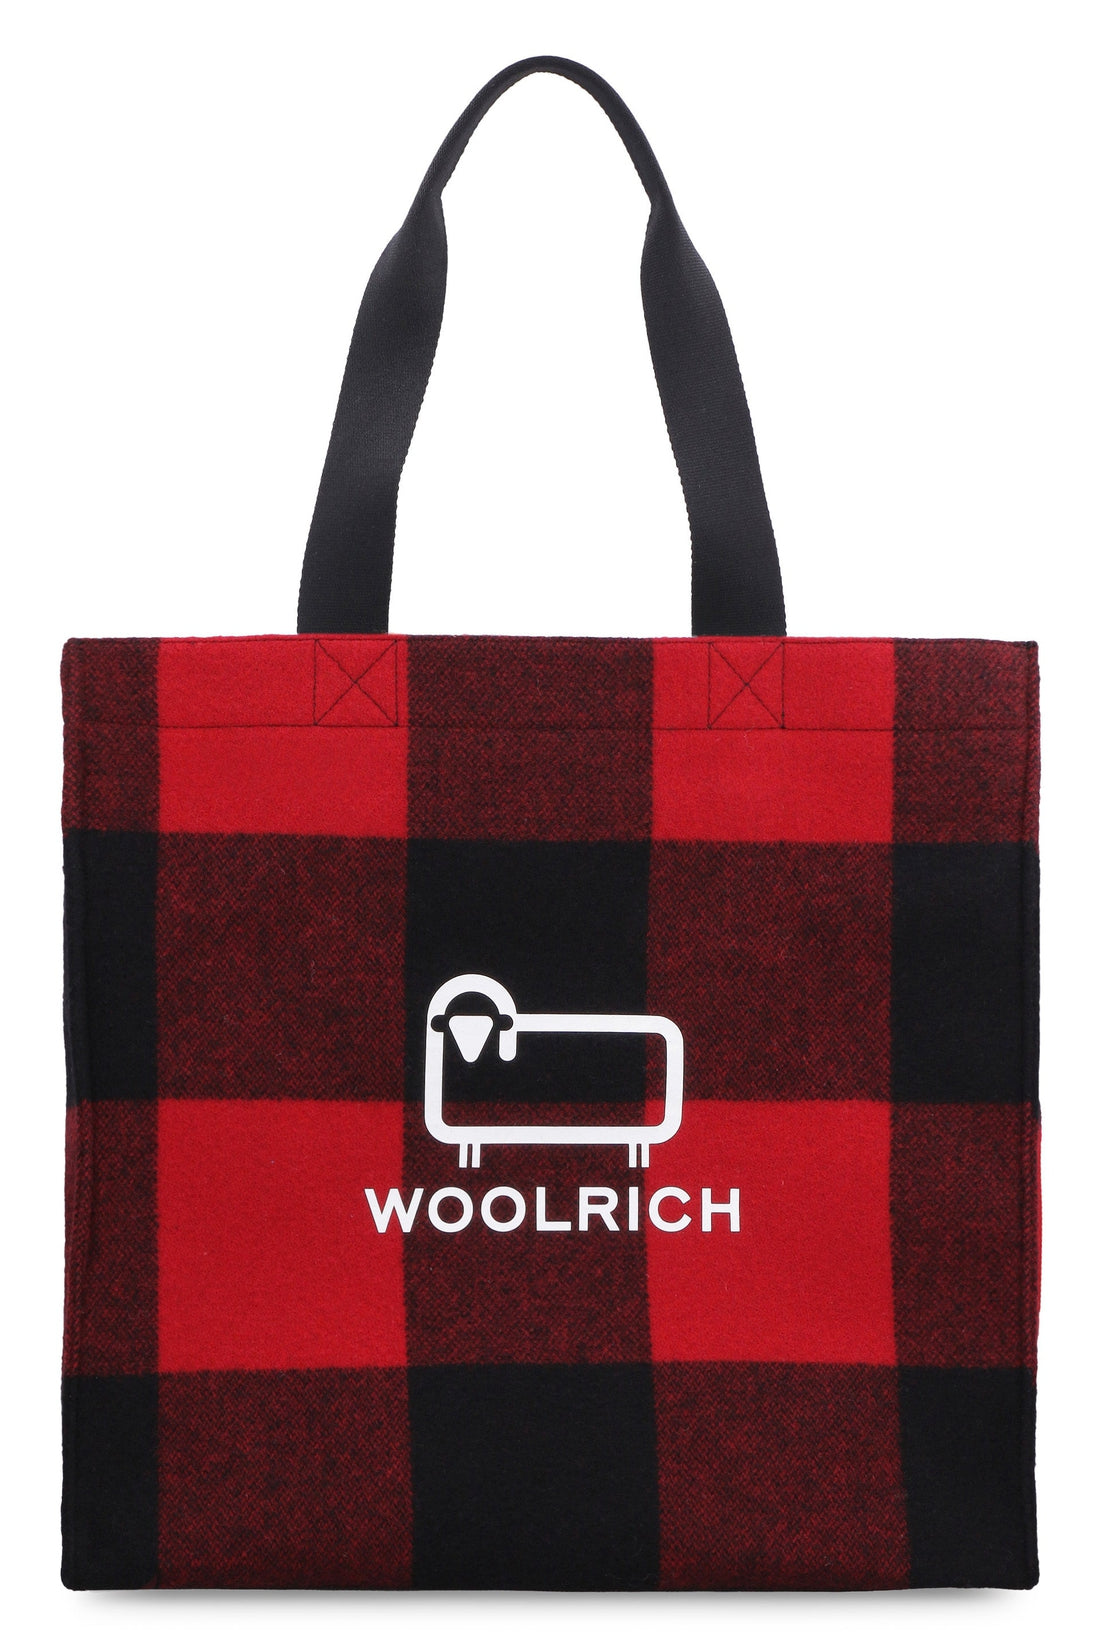 Woolrich-OUTLET-SALE-Logo detail tote bag-ARCHIVIST